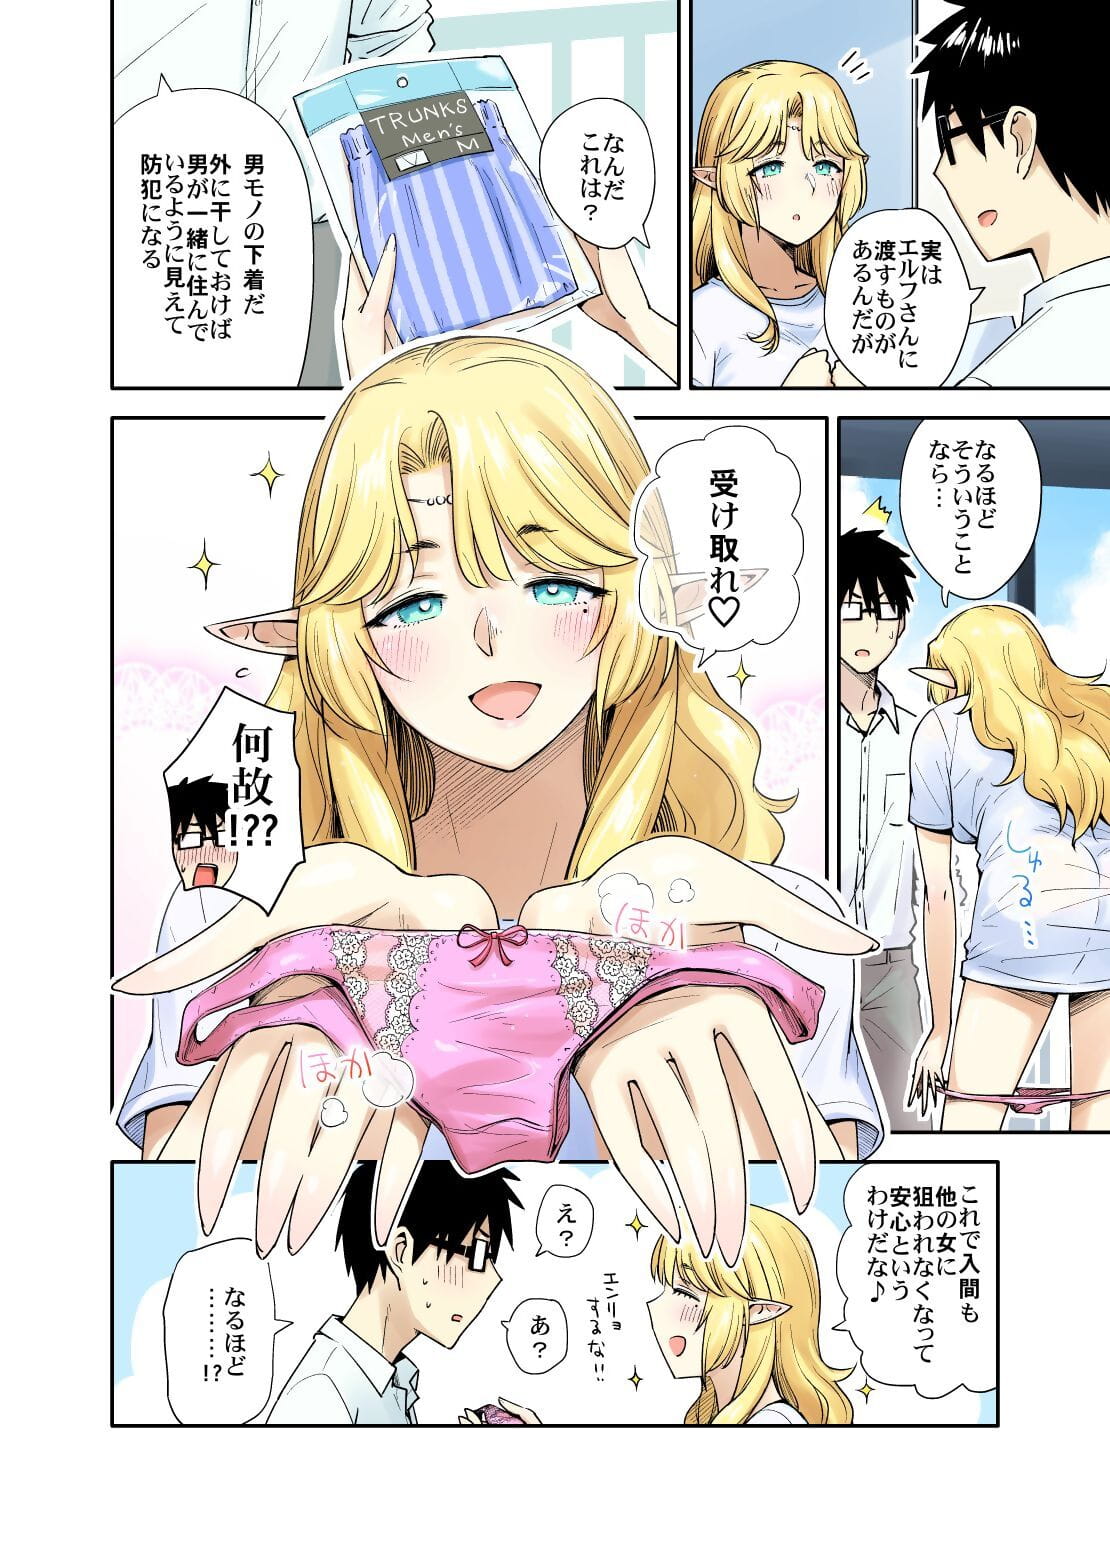 elf Manga page 1